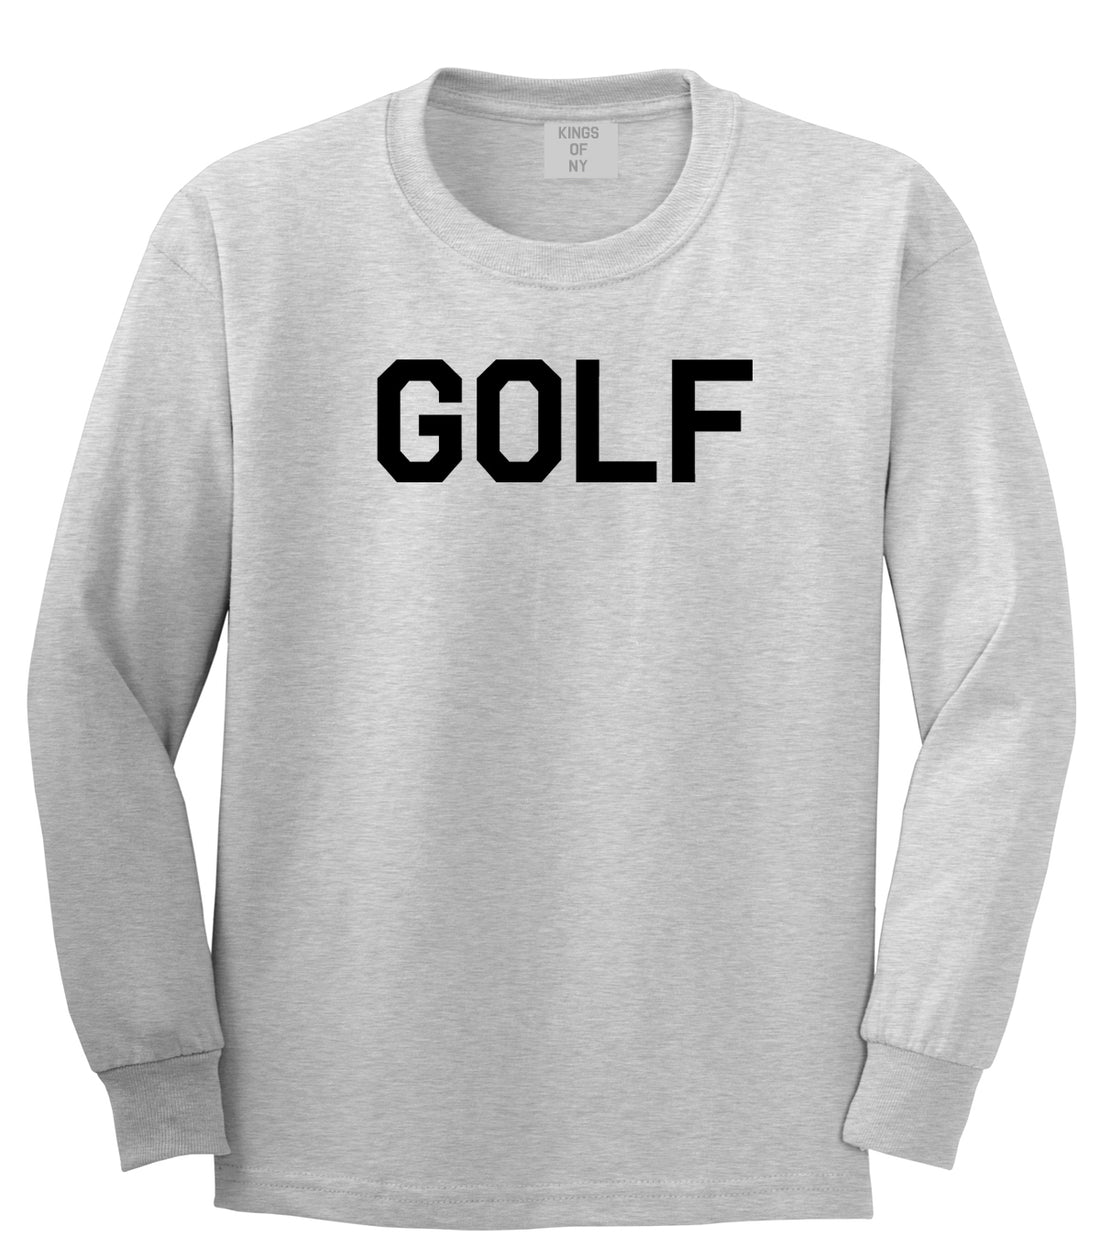 Golf Sport Mens Grey Long Sleeve T-Shirt by KINGS OF NY